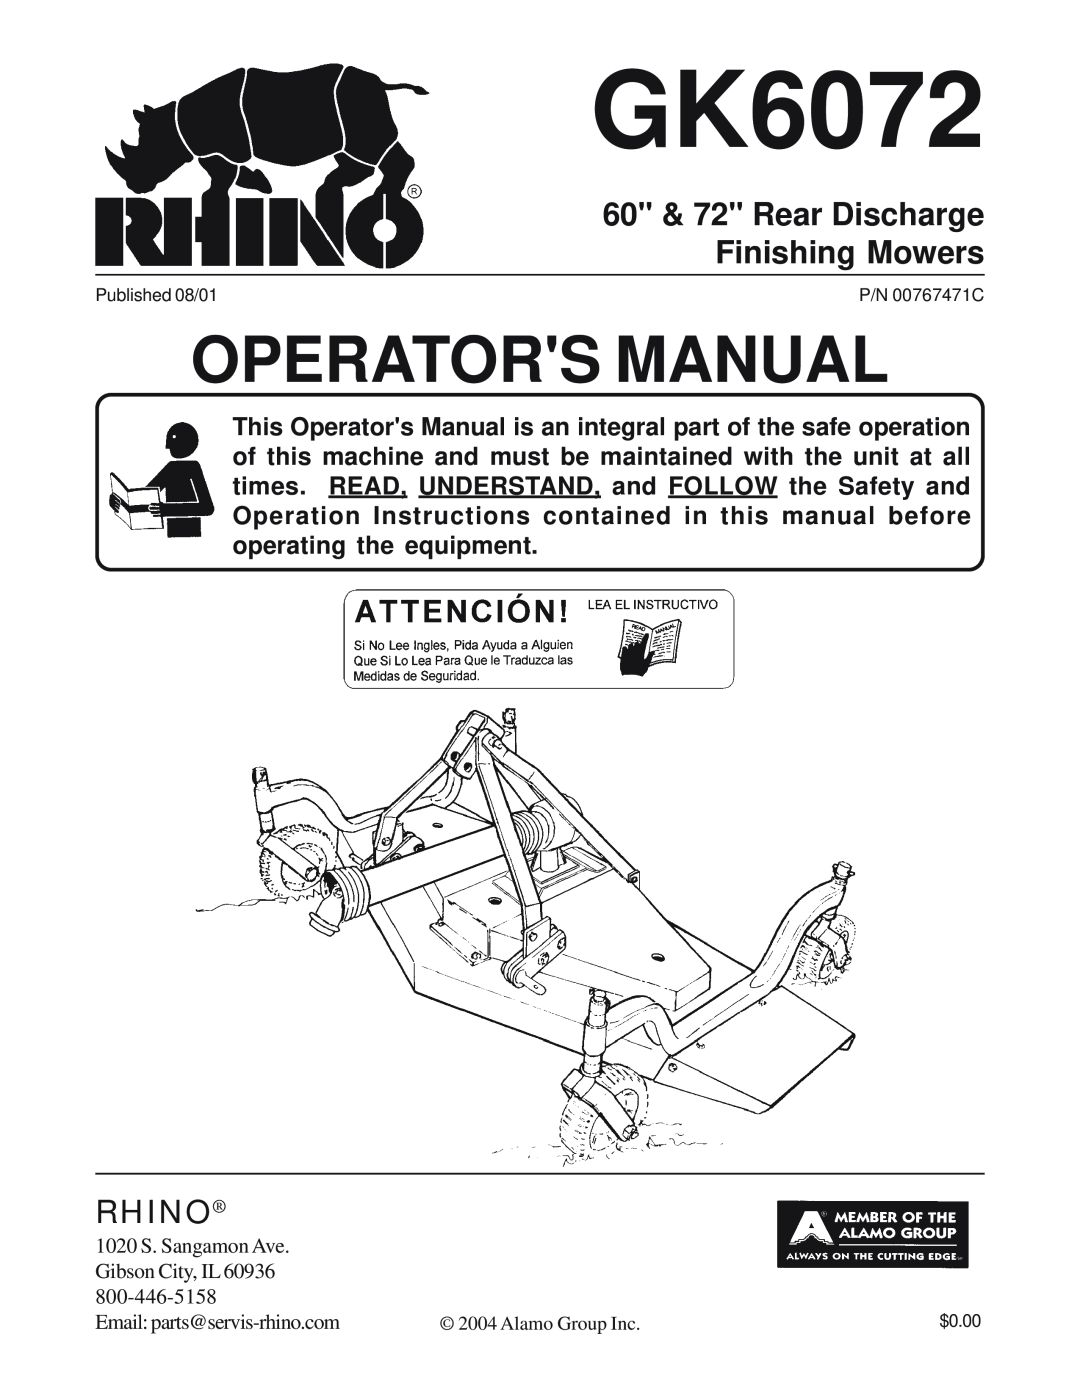 Rhino Mounts GK6072 manual 60 & 72 Rear Discharge Finishing Mowers, Rhino, Operators Manual 